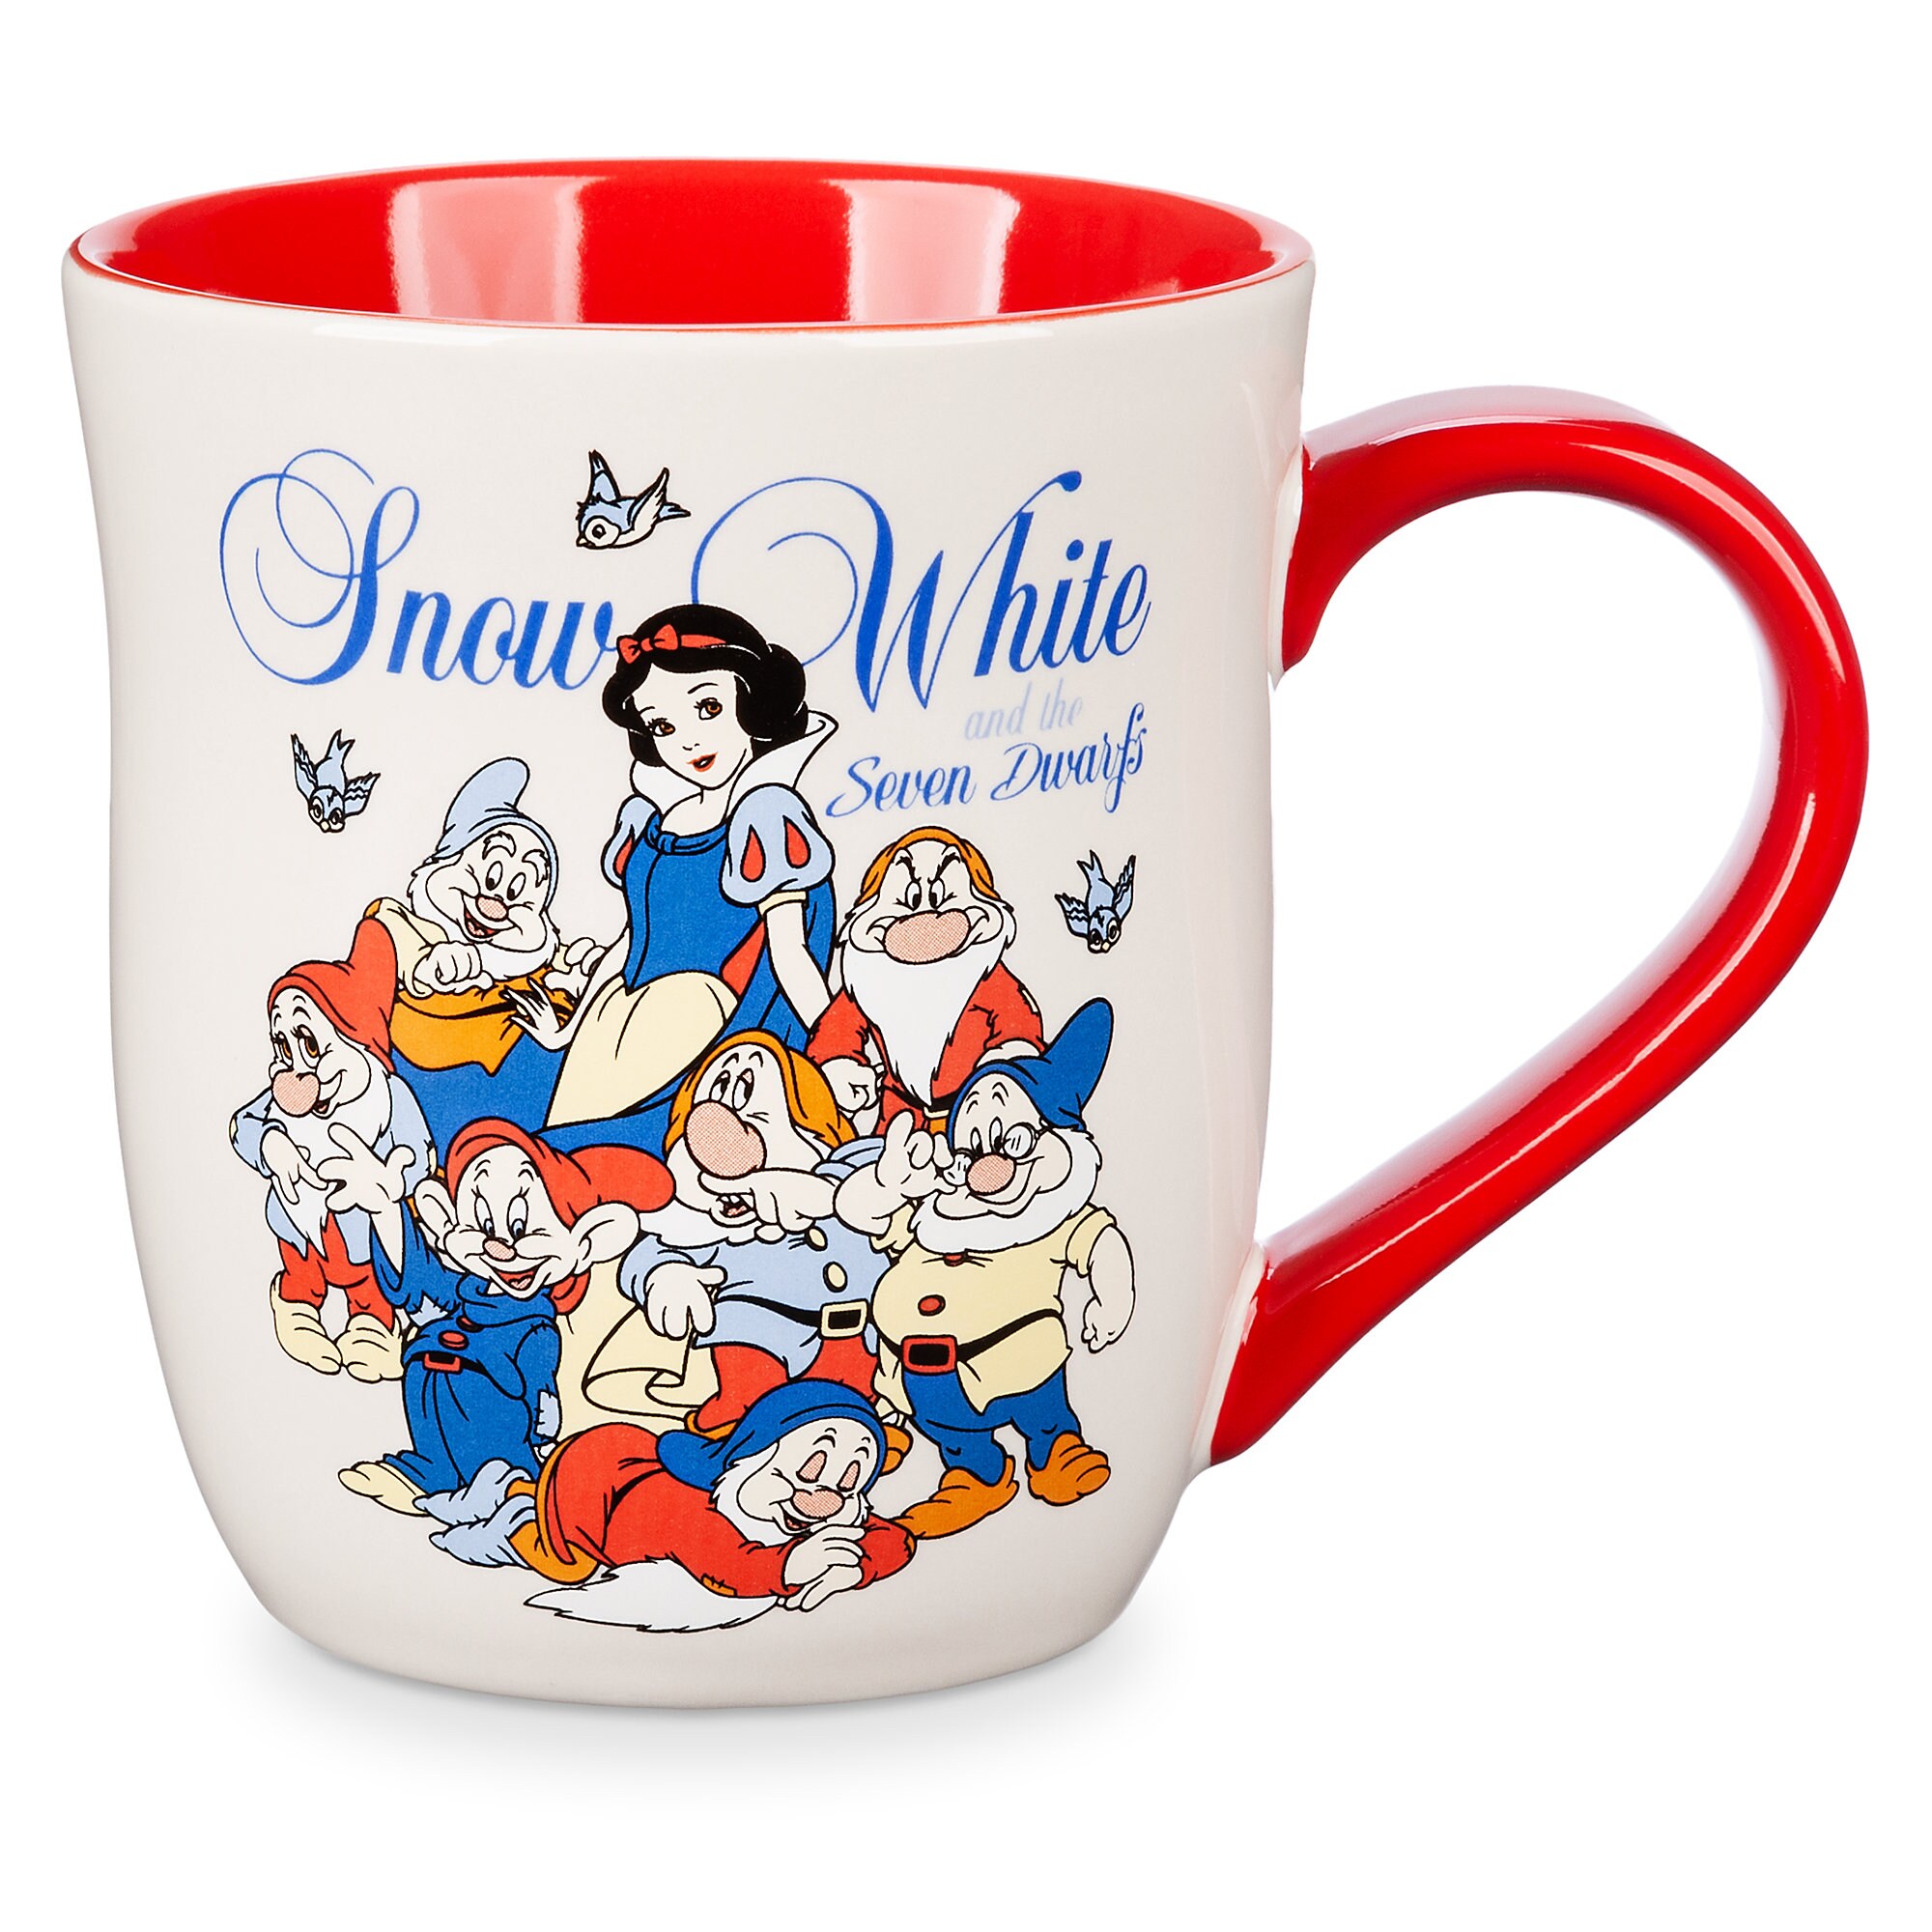 Snow White and the Seven Dwarfs Mug